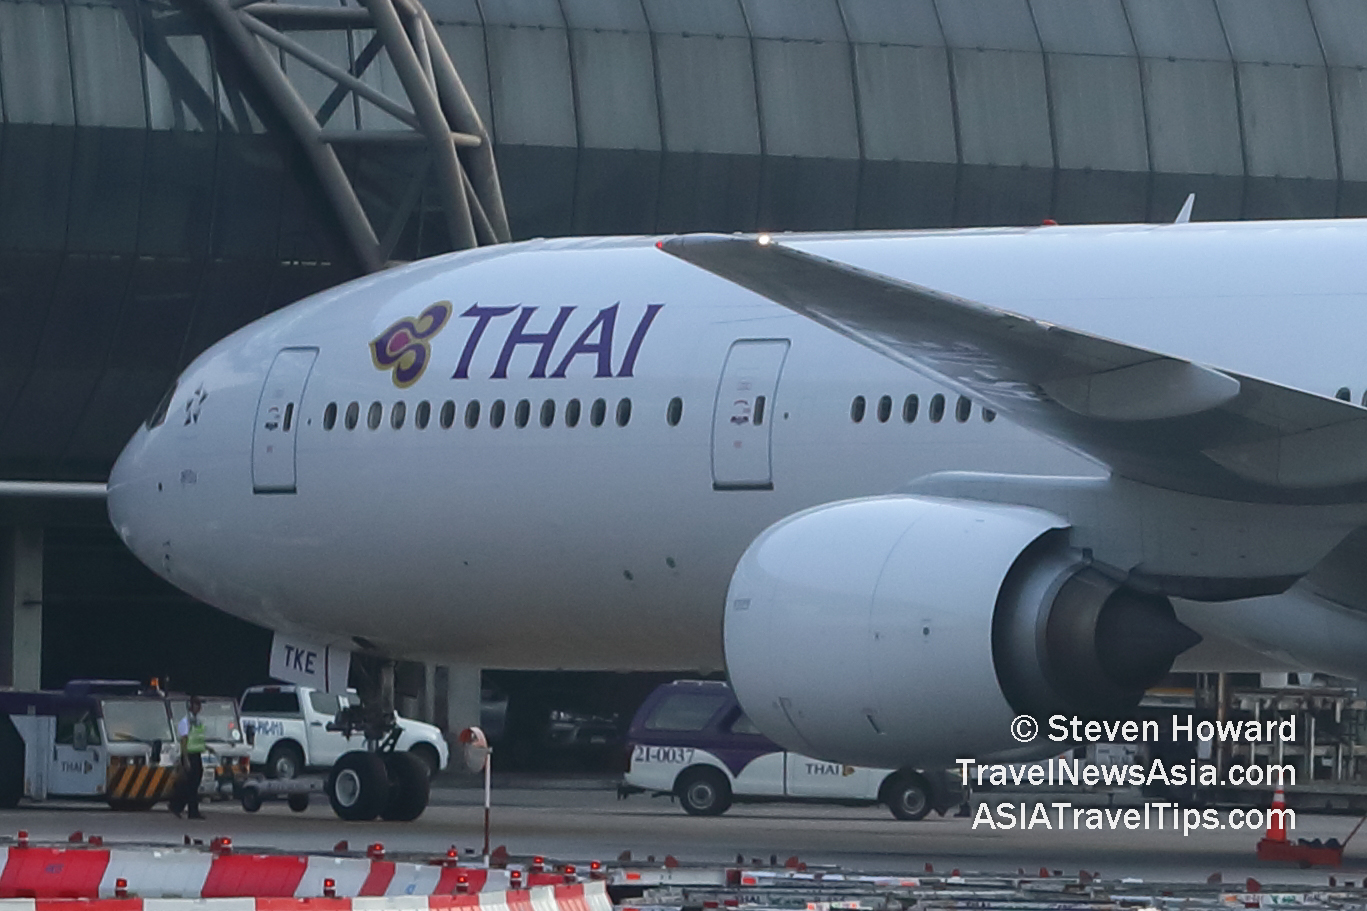 Thai Airways Boeing 777 reg: HS-TKE at Suvarnabhumi Airport near Bangkok, Thailand. Picture by Steven Howard of TravelNewsAsia.com Click to enlarge.